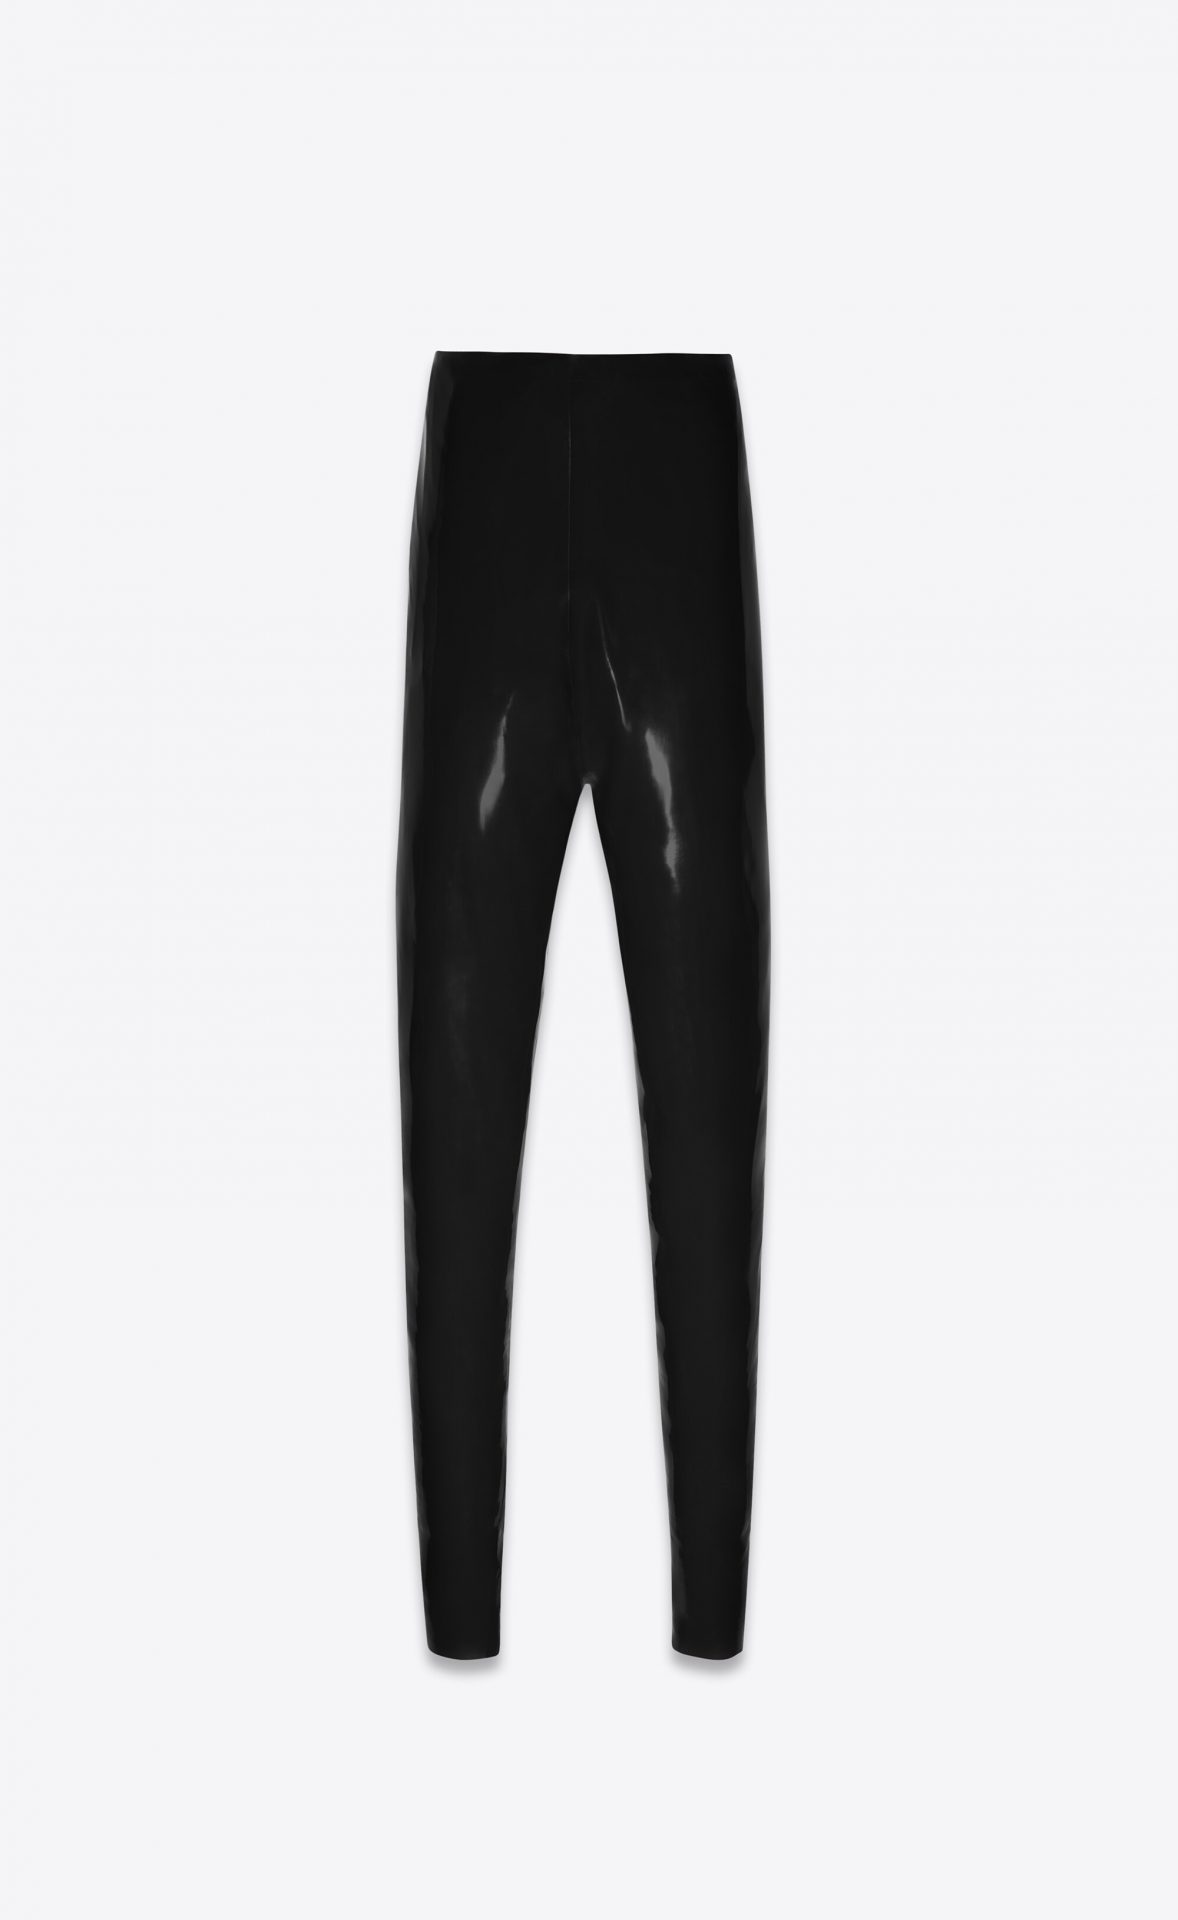 Latex leggings – would you wear them? - WSTale.com